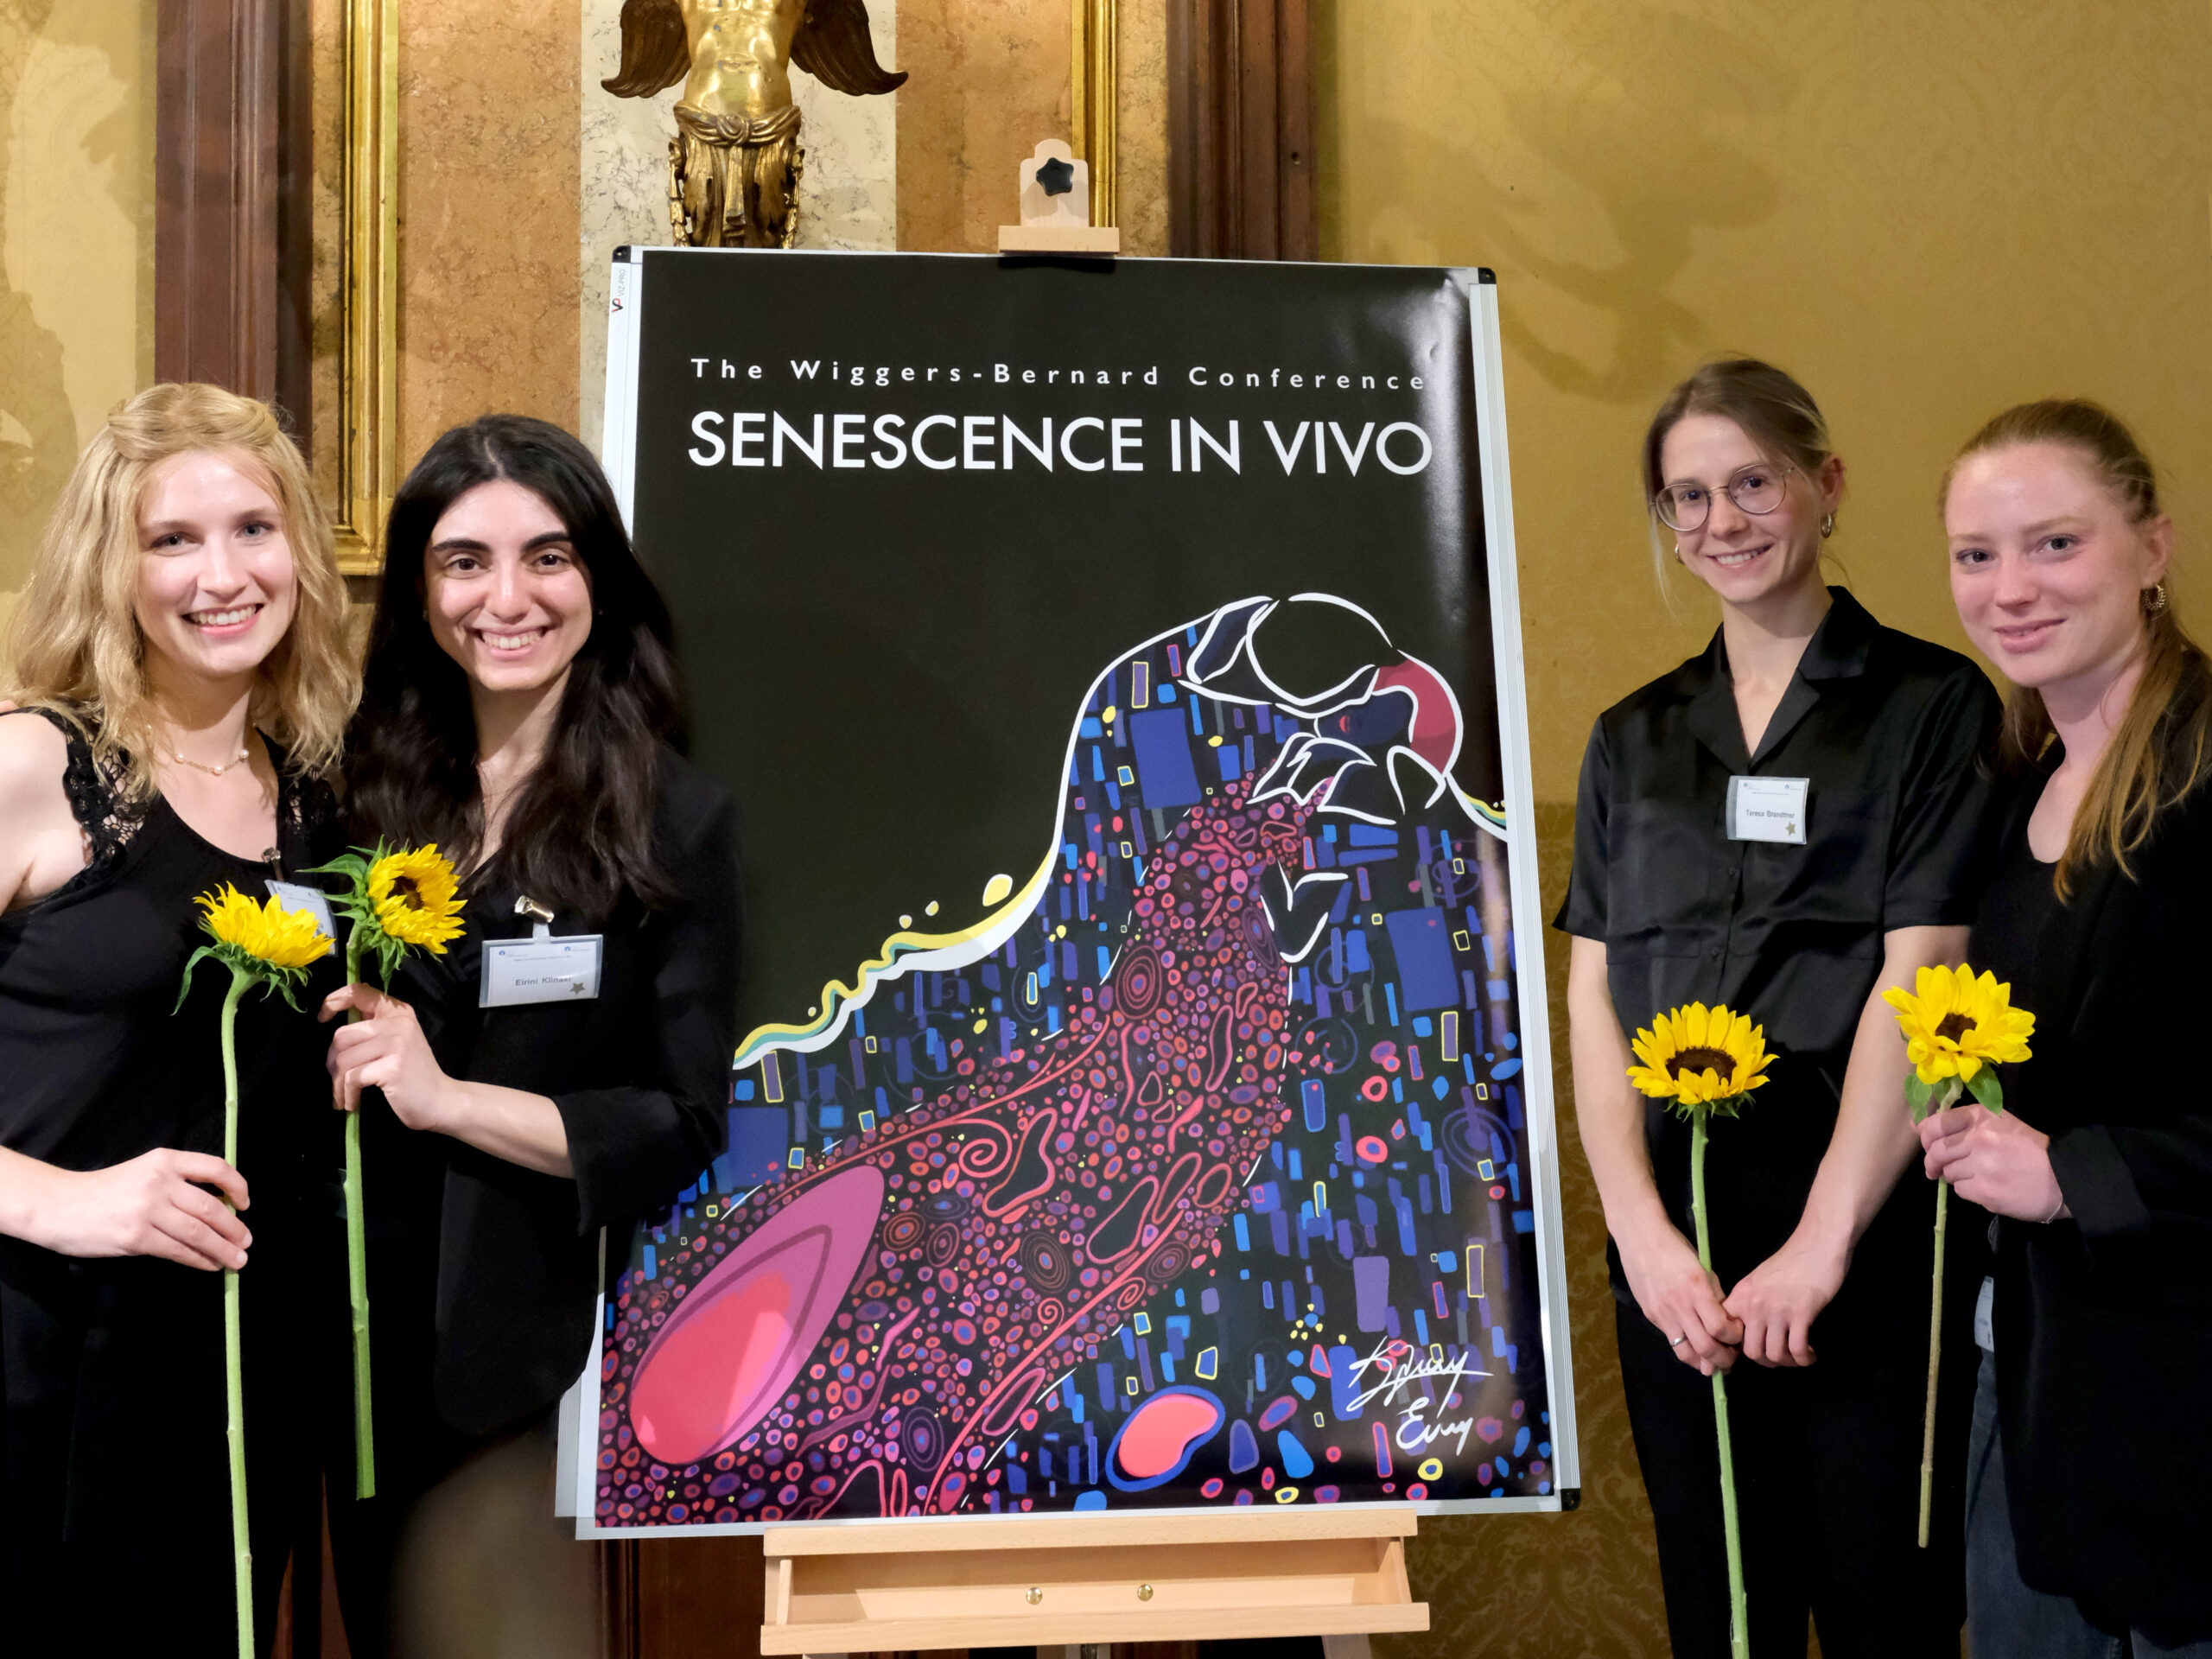 Die Wiggers-Bernard-Konferenz: Senescence in vivo